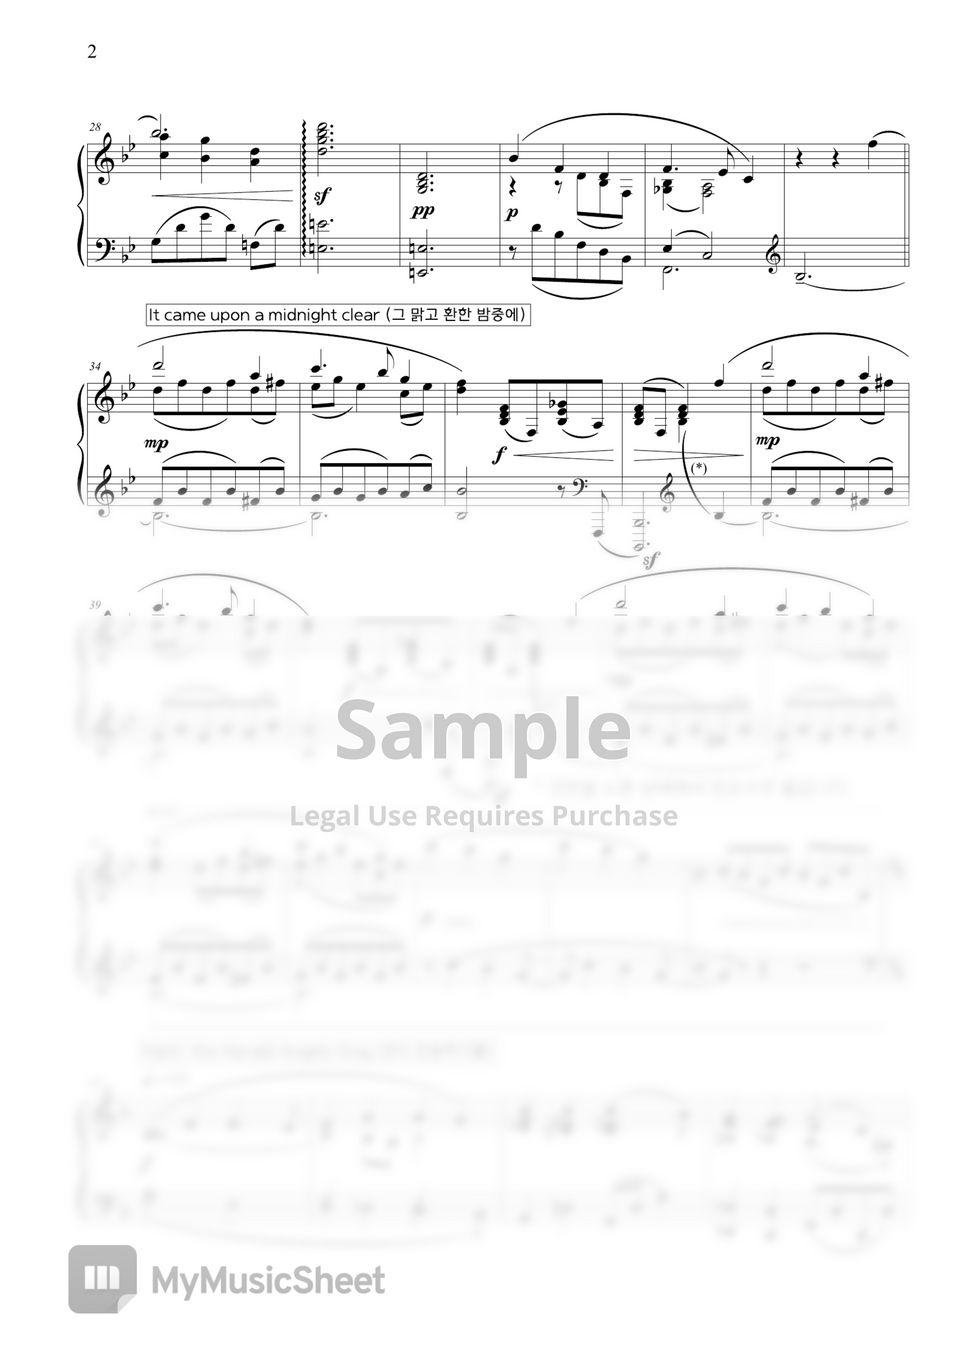 Carol Christmas Song Medley Sheets by THIS IS PIANO